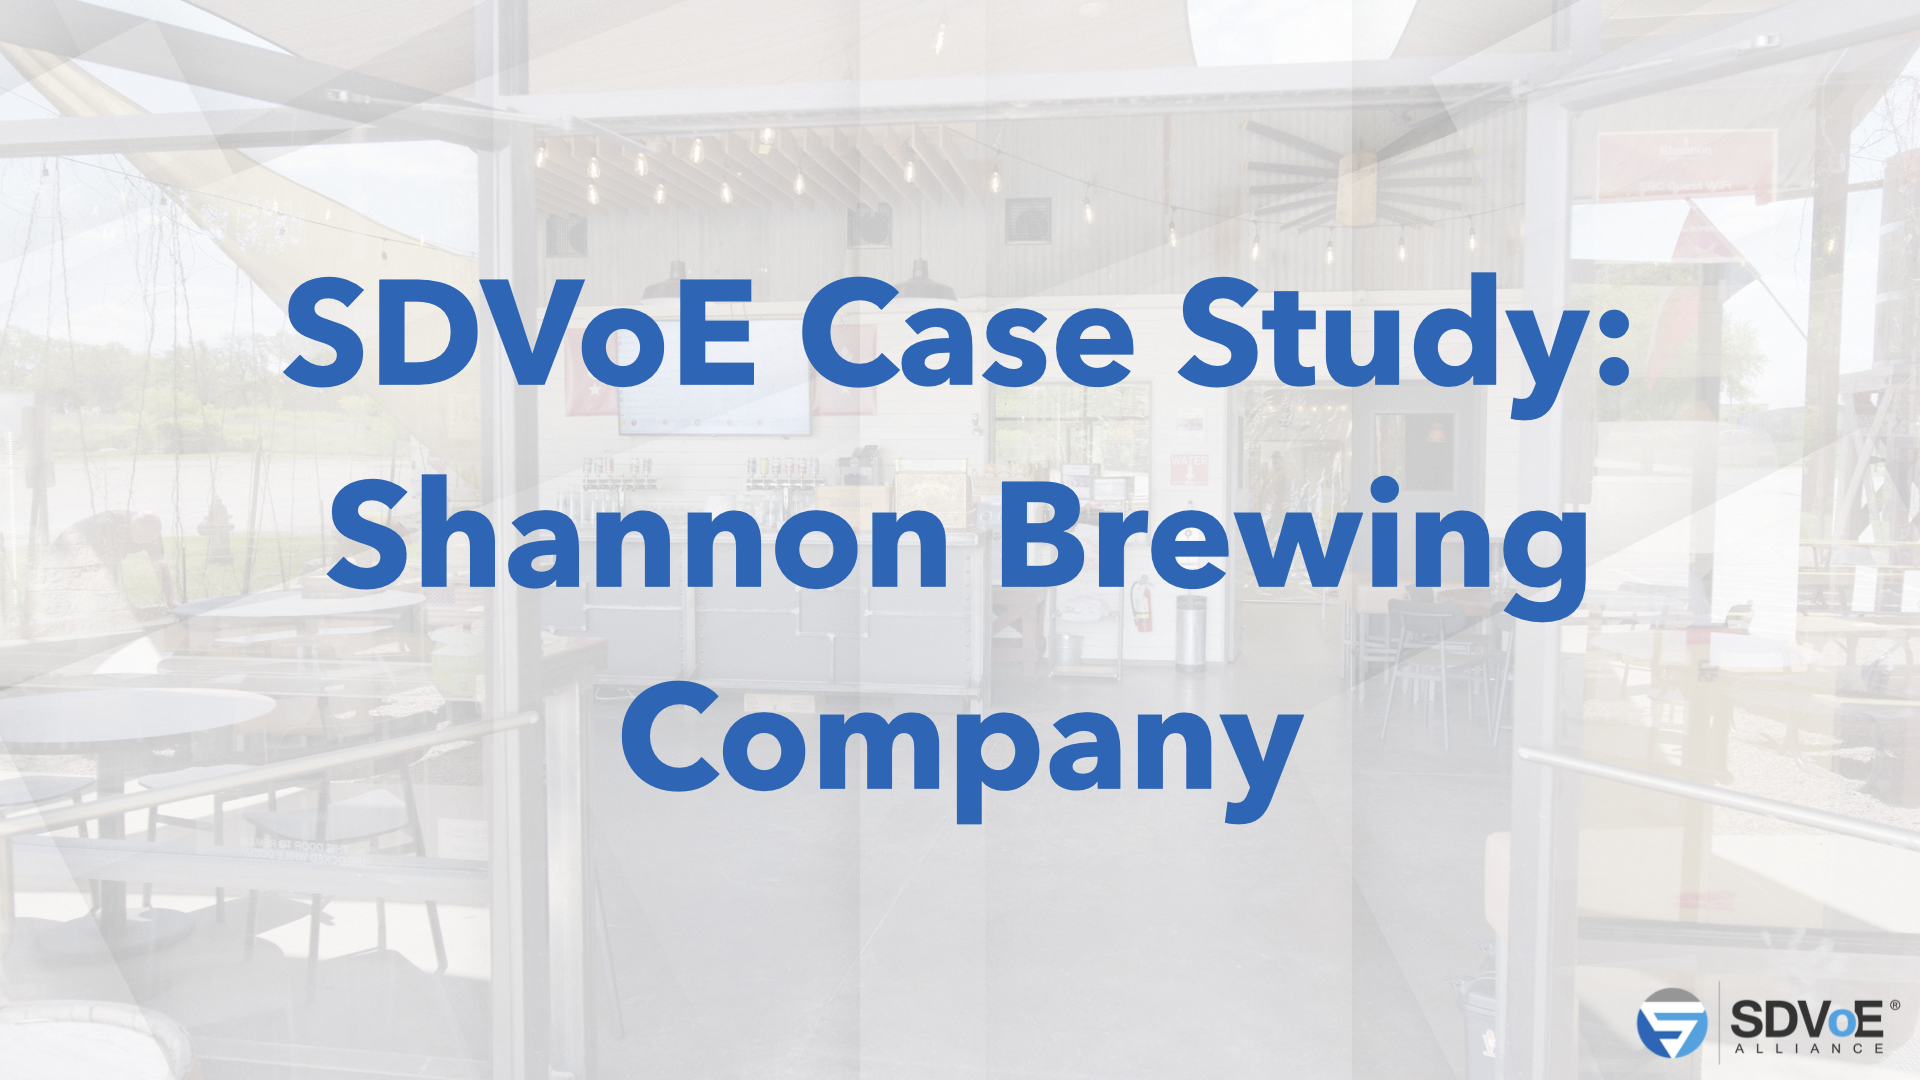 SDVoE Case Study: Shannon Brewing Company